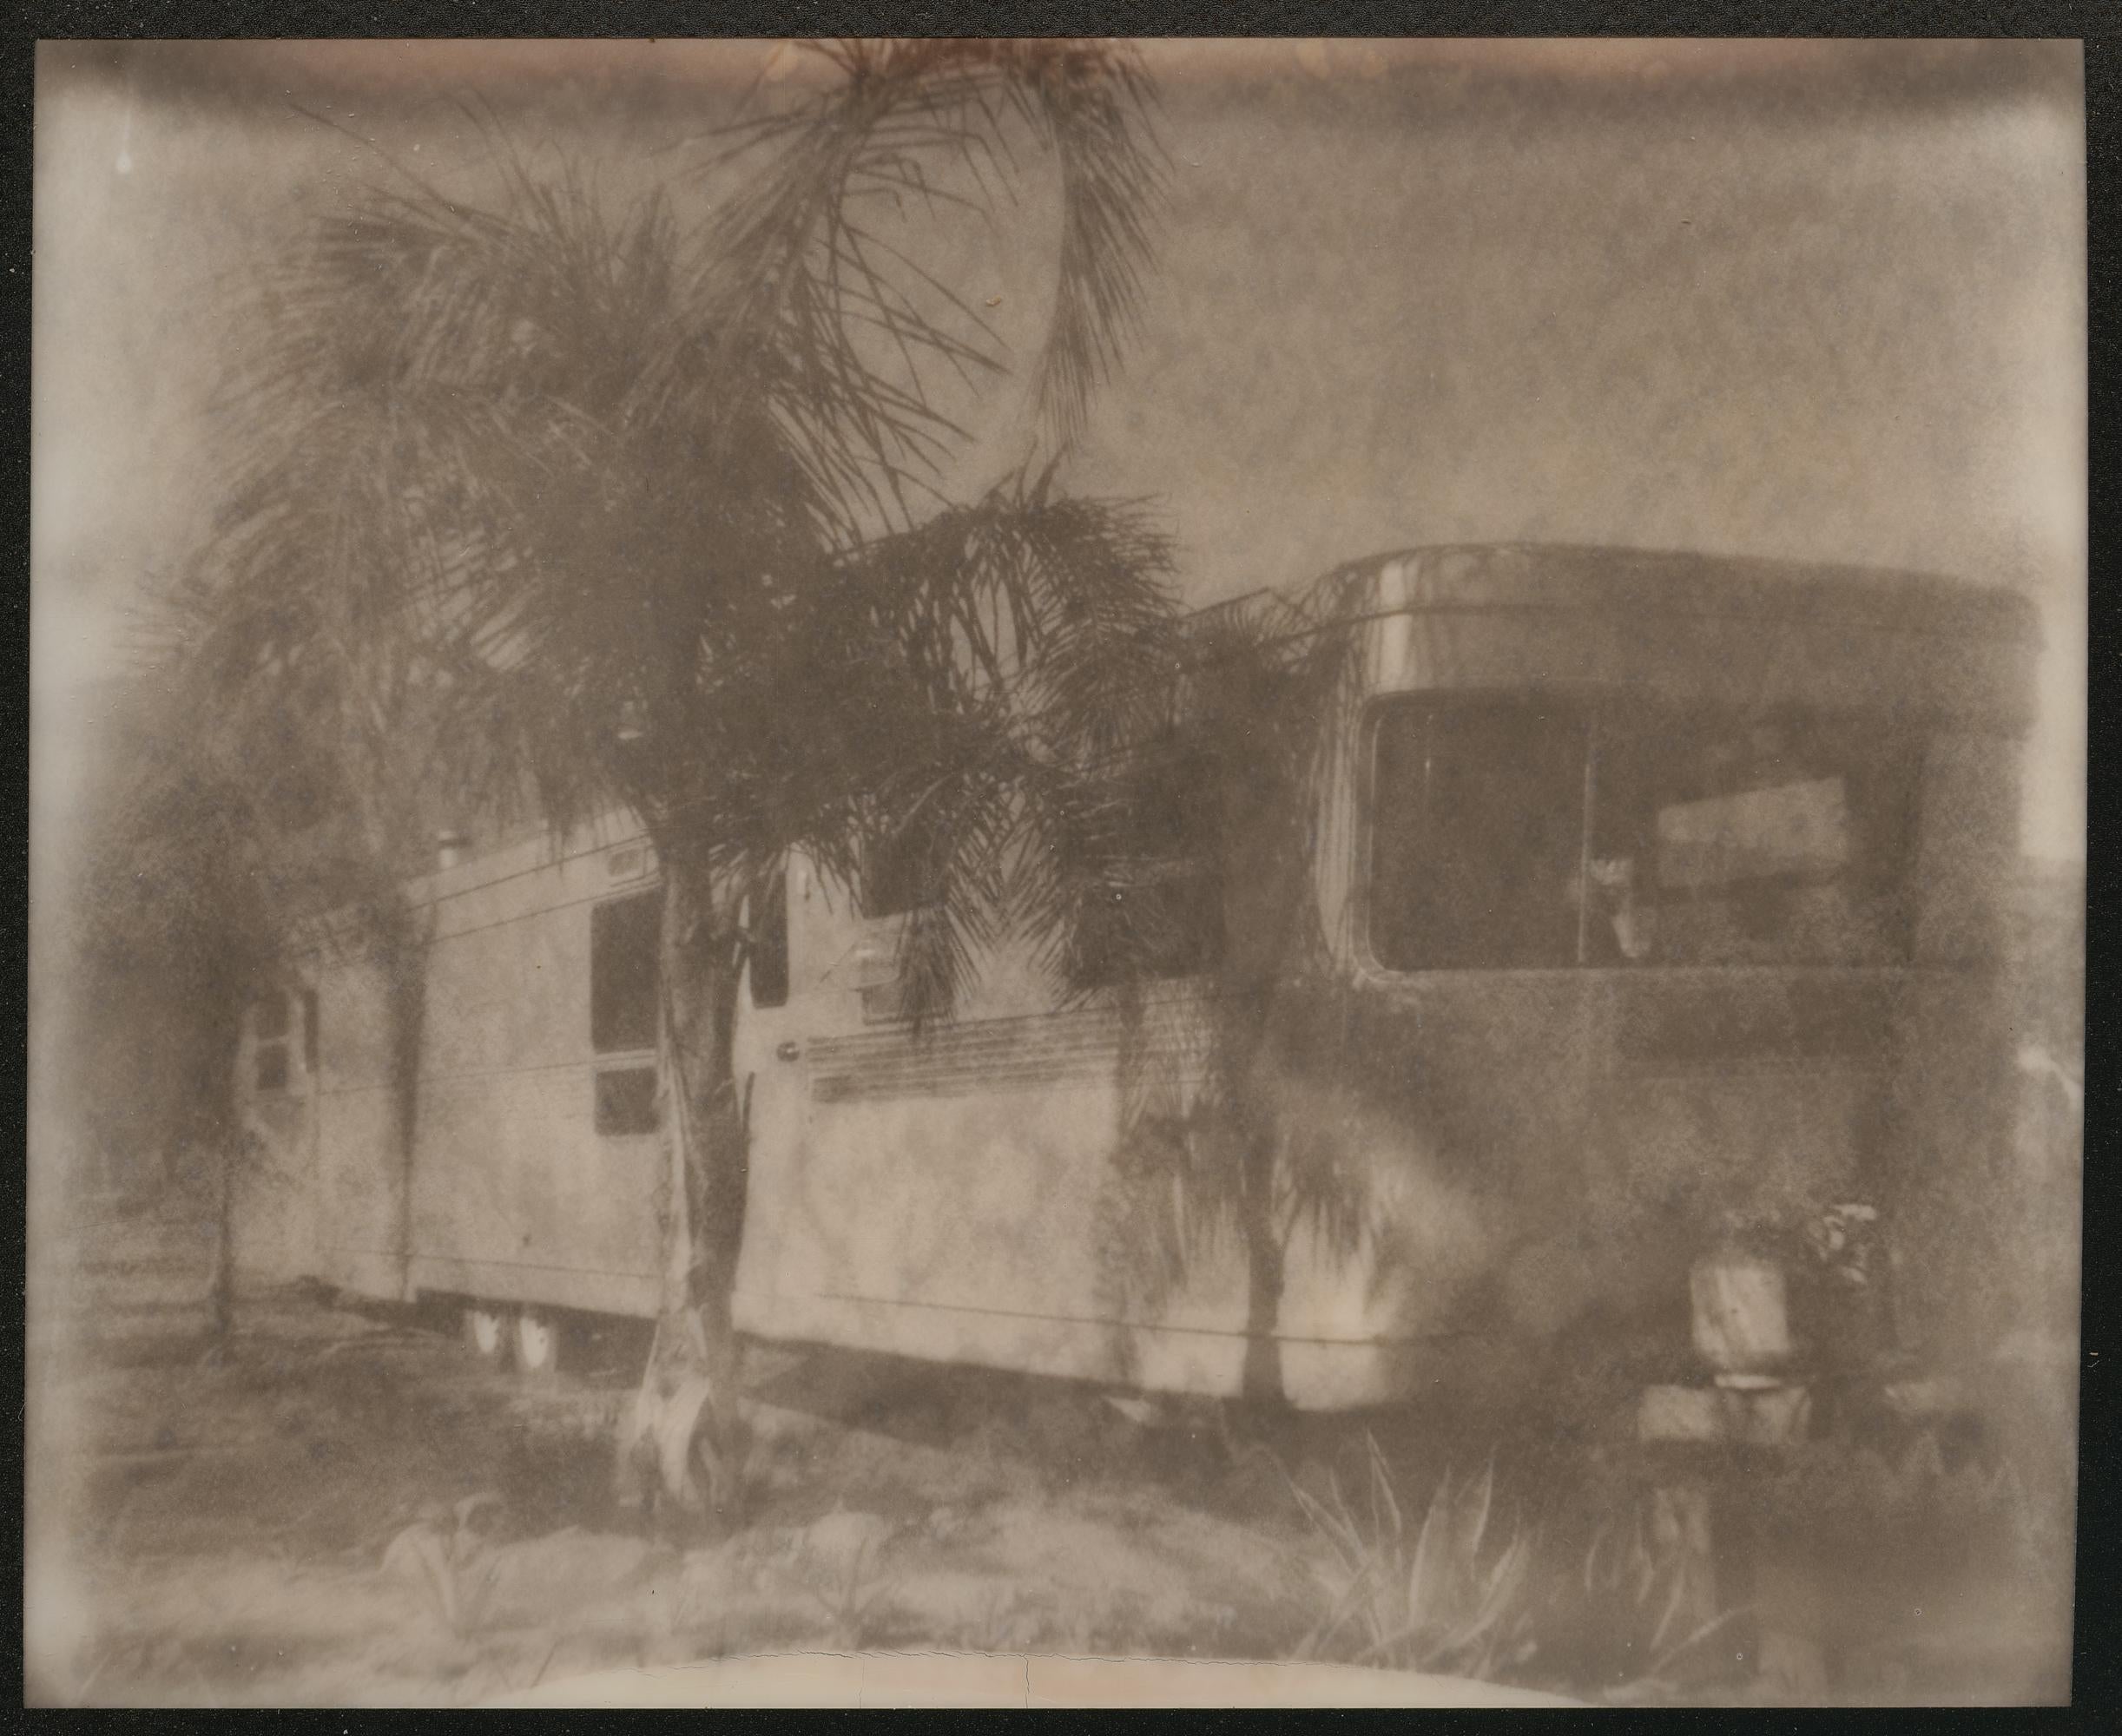 Stefanie Schneider Black and White Photograph - Desert Living (California Dreaming) - Contemporary, 21st Century, Polaroid